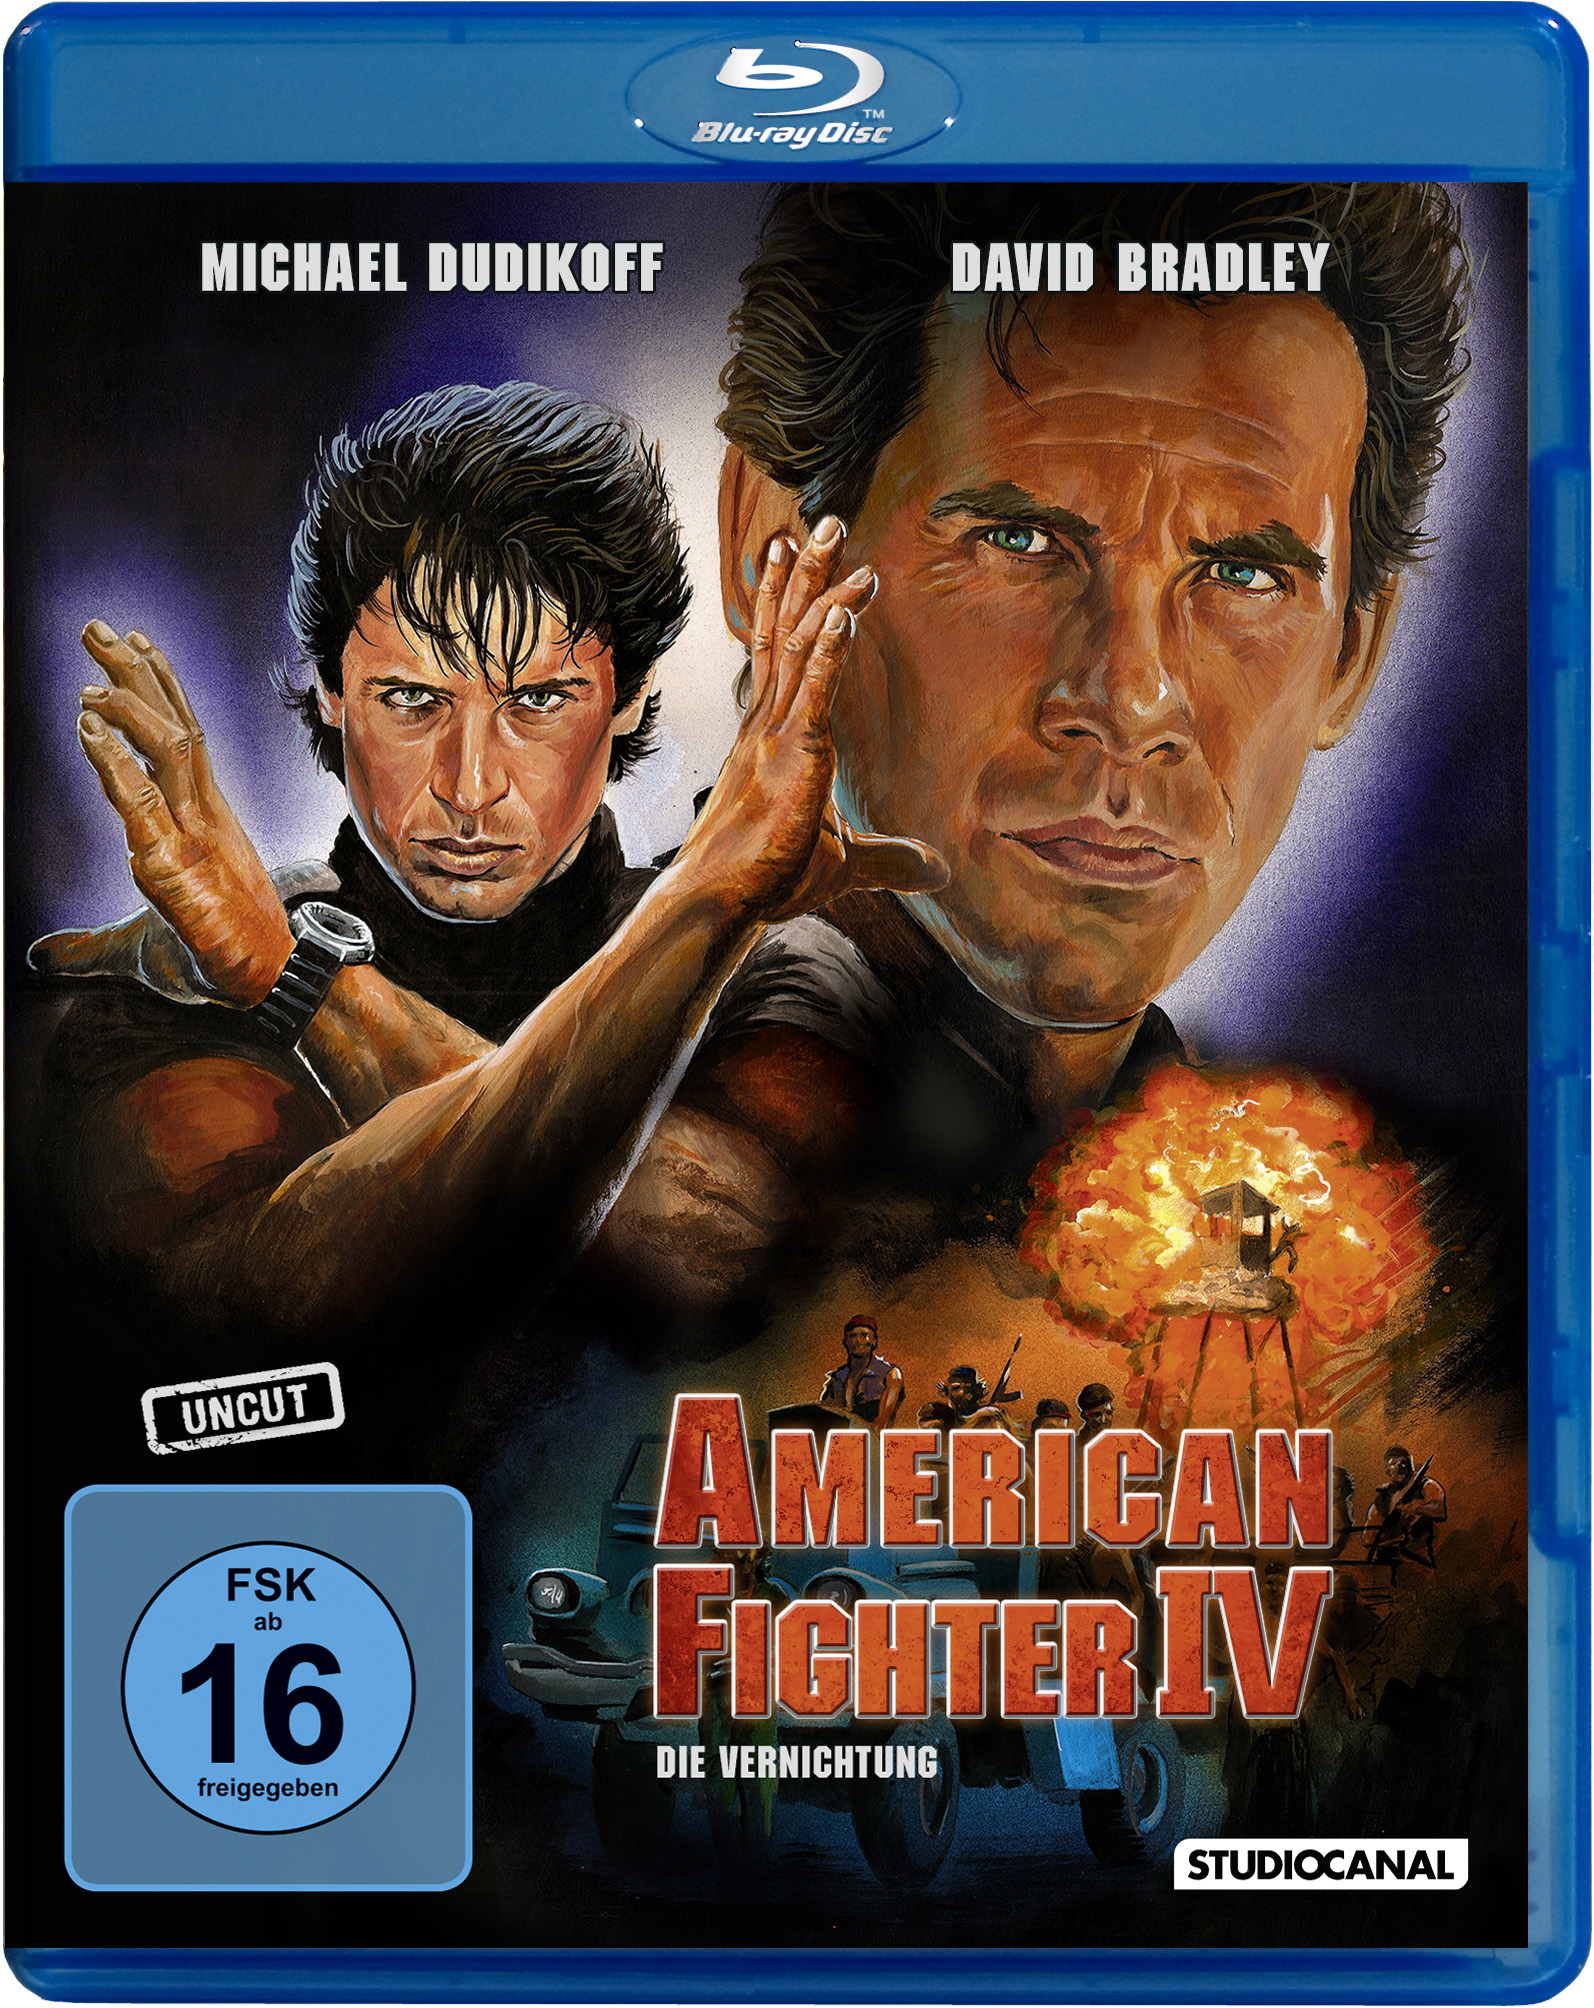 4 Die Vernichtung American - Blu-ray Fighter